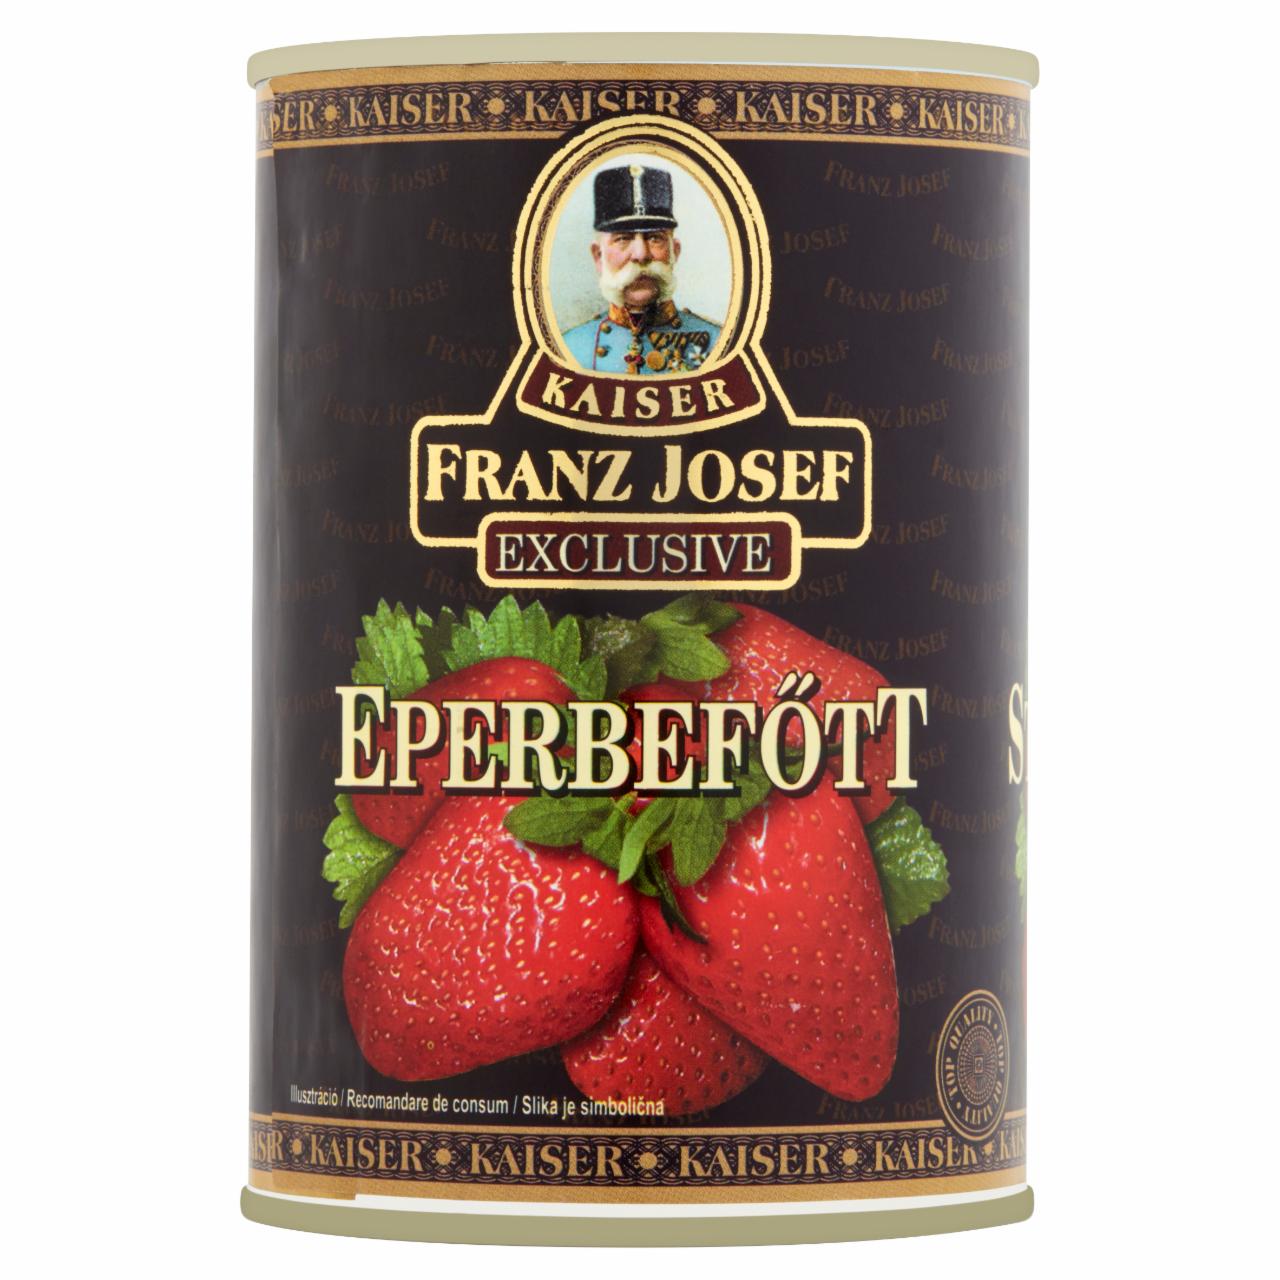 Képek - Kaiser Franz Josef Exclusive eperbefőtt enyhén cukrozott lében 410 g